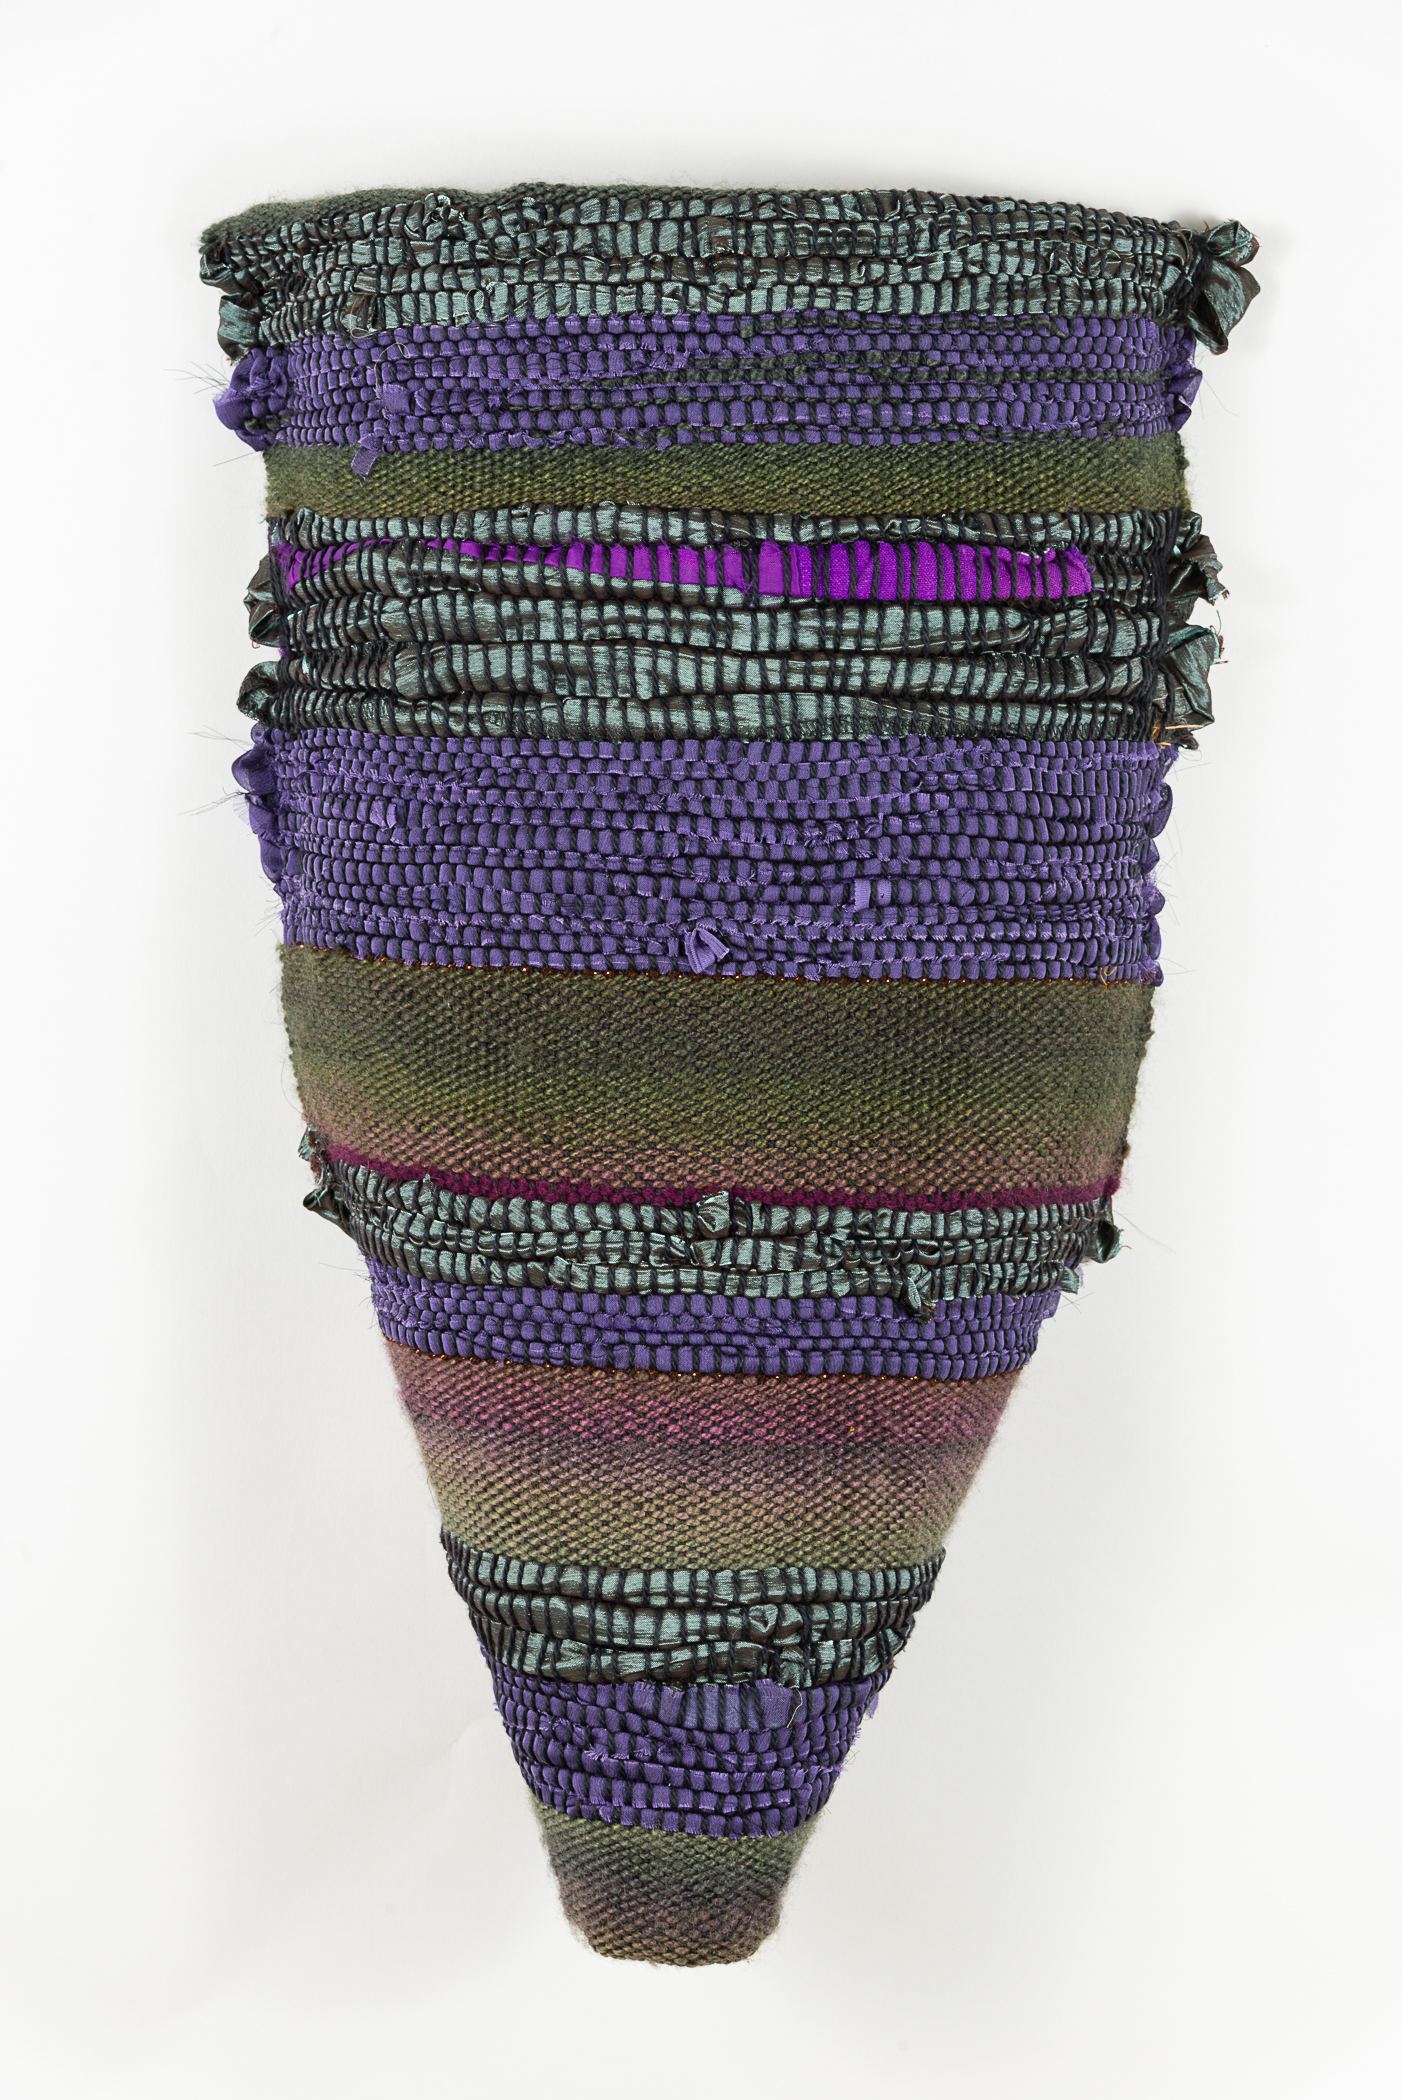  Sylvia Vander Sluis,  Torso (Purple/Turquoise)  Handwoven wool, silk, polyester, 20x12x3 